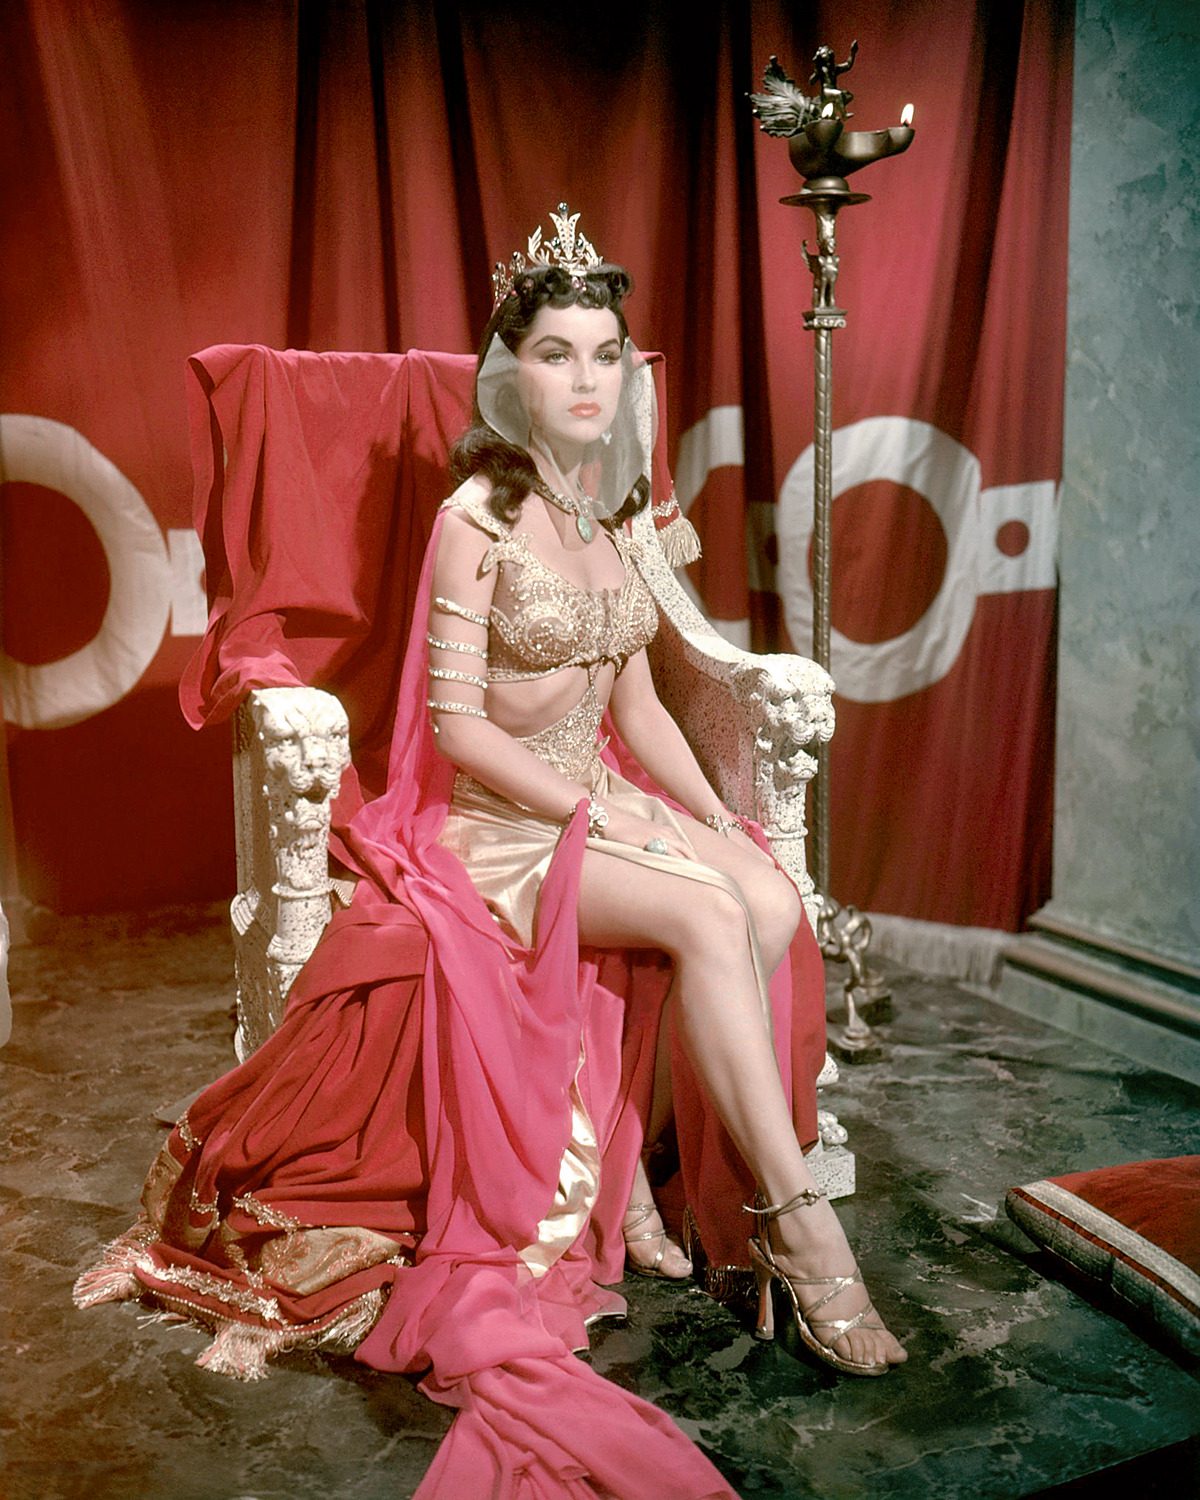 20th-century-man:
“Debra Paget / production still from Harmon Jones’s Princess of the Nile (1954)
”